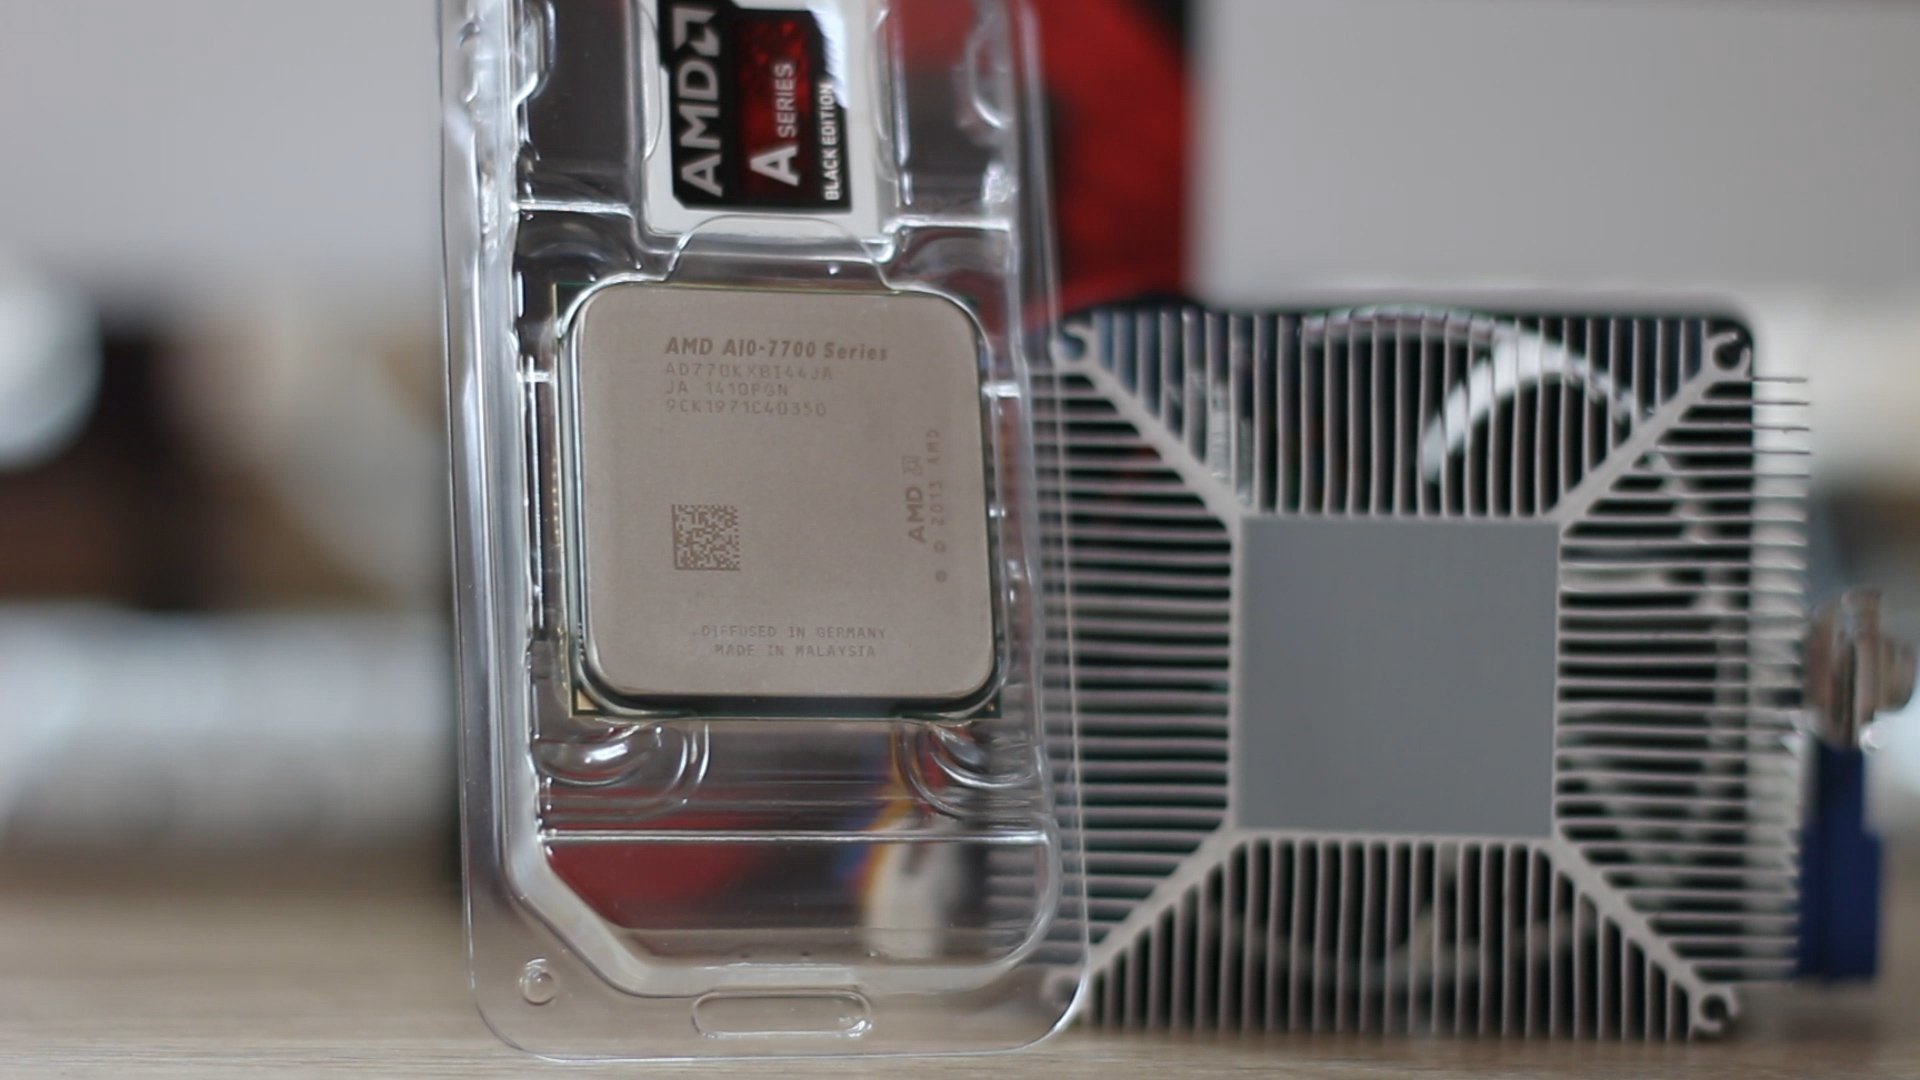 Radeon r7 9700. AMD a10 7700k. Кристалл процессора 7700k. A10-7700. A10-7700k with Radeon™ r7 Series.